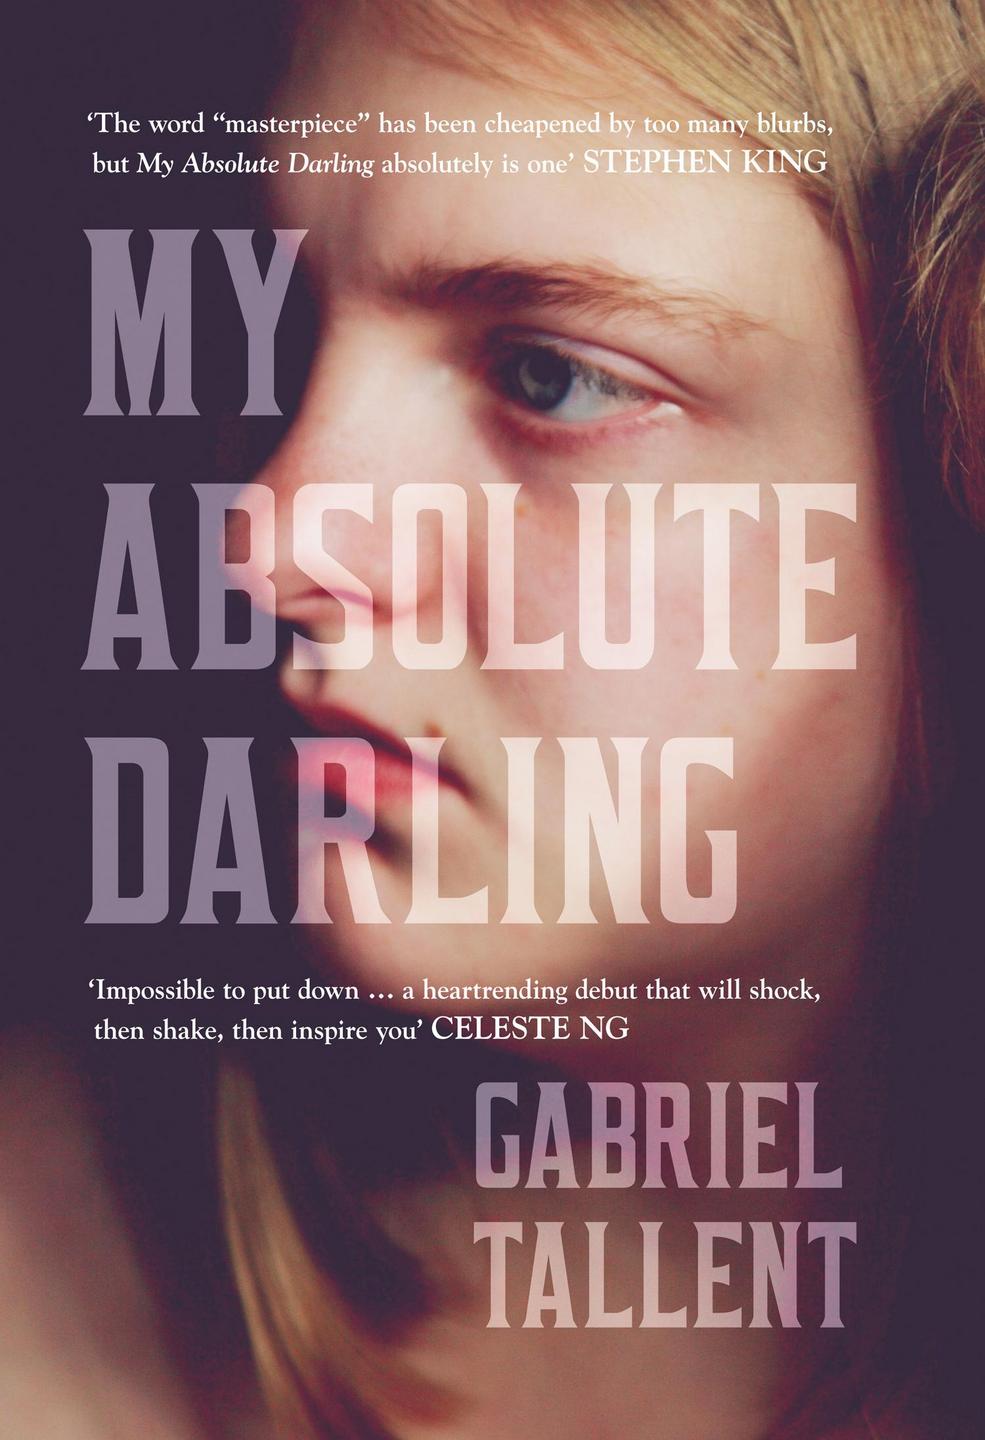 Gabriel Tallent – My Absolute Darling